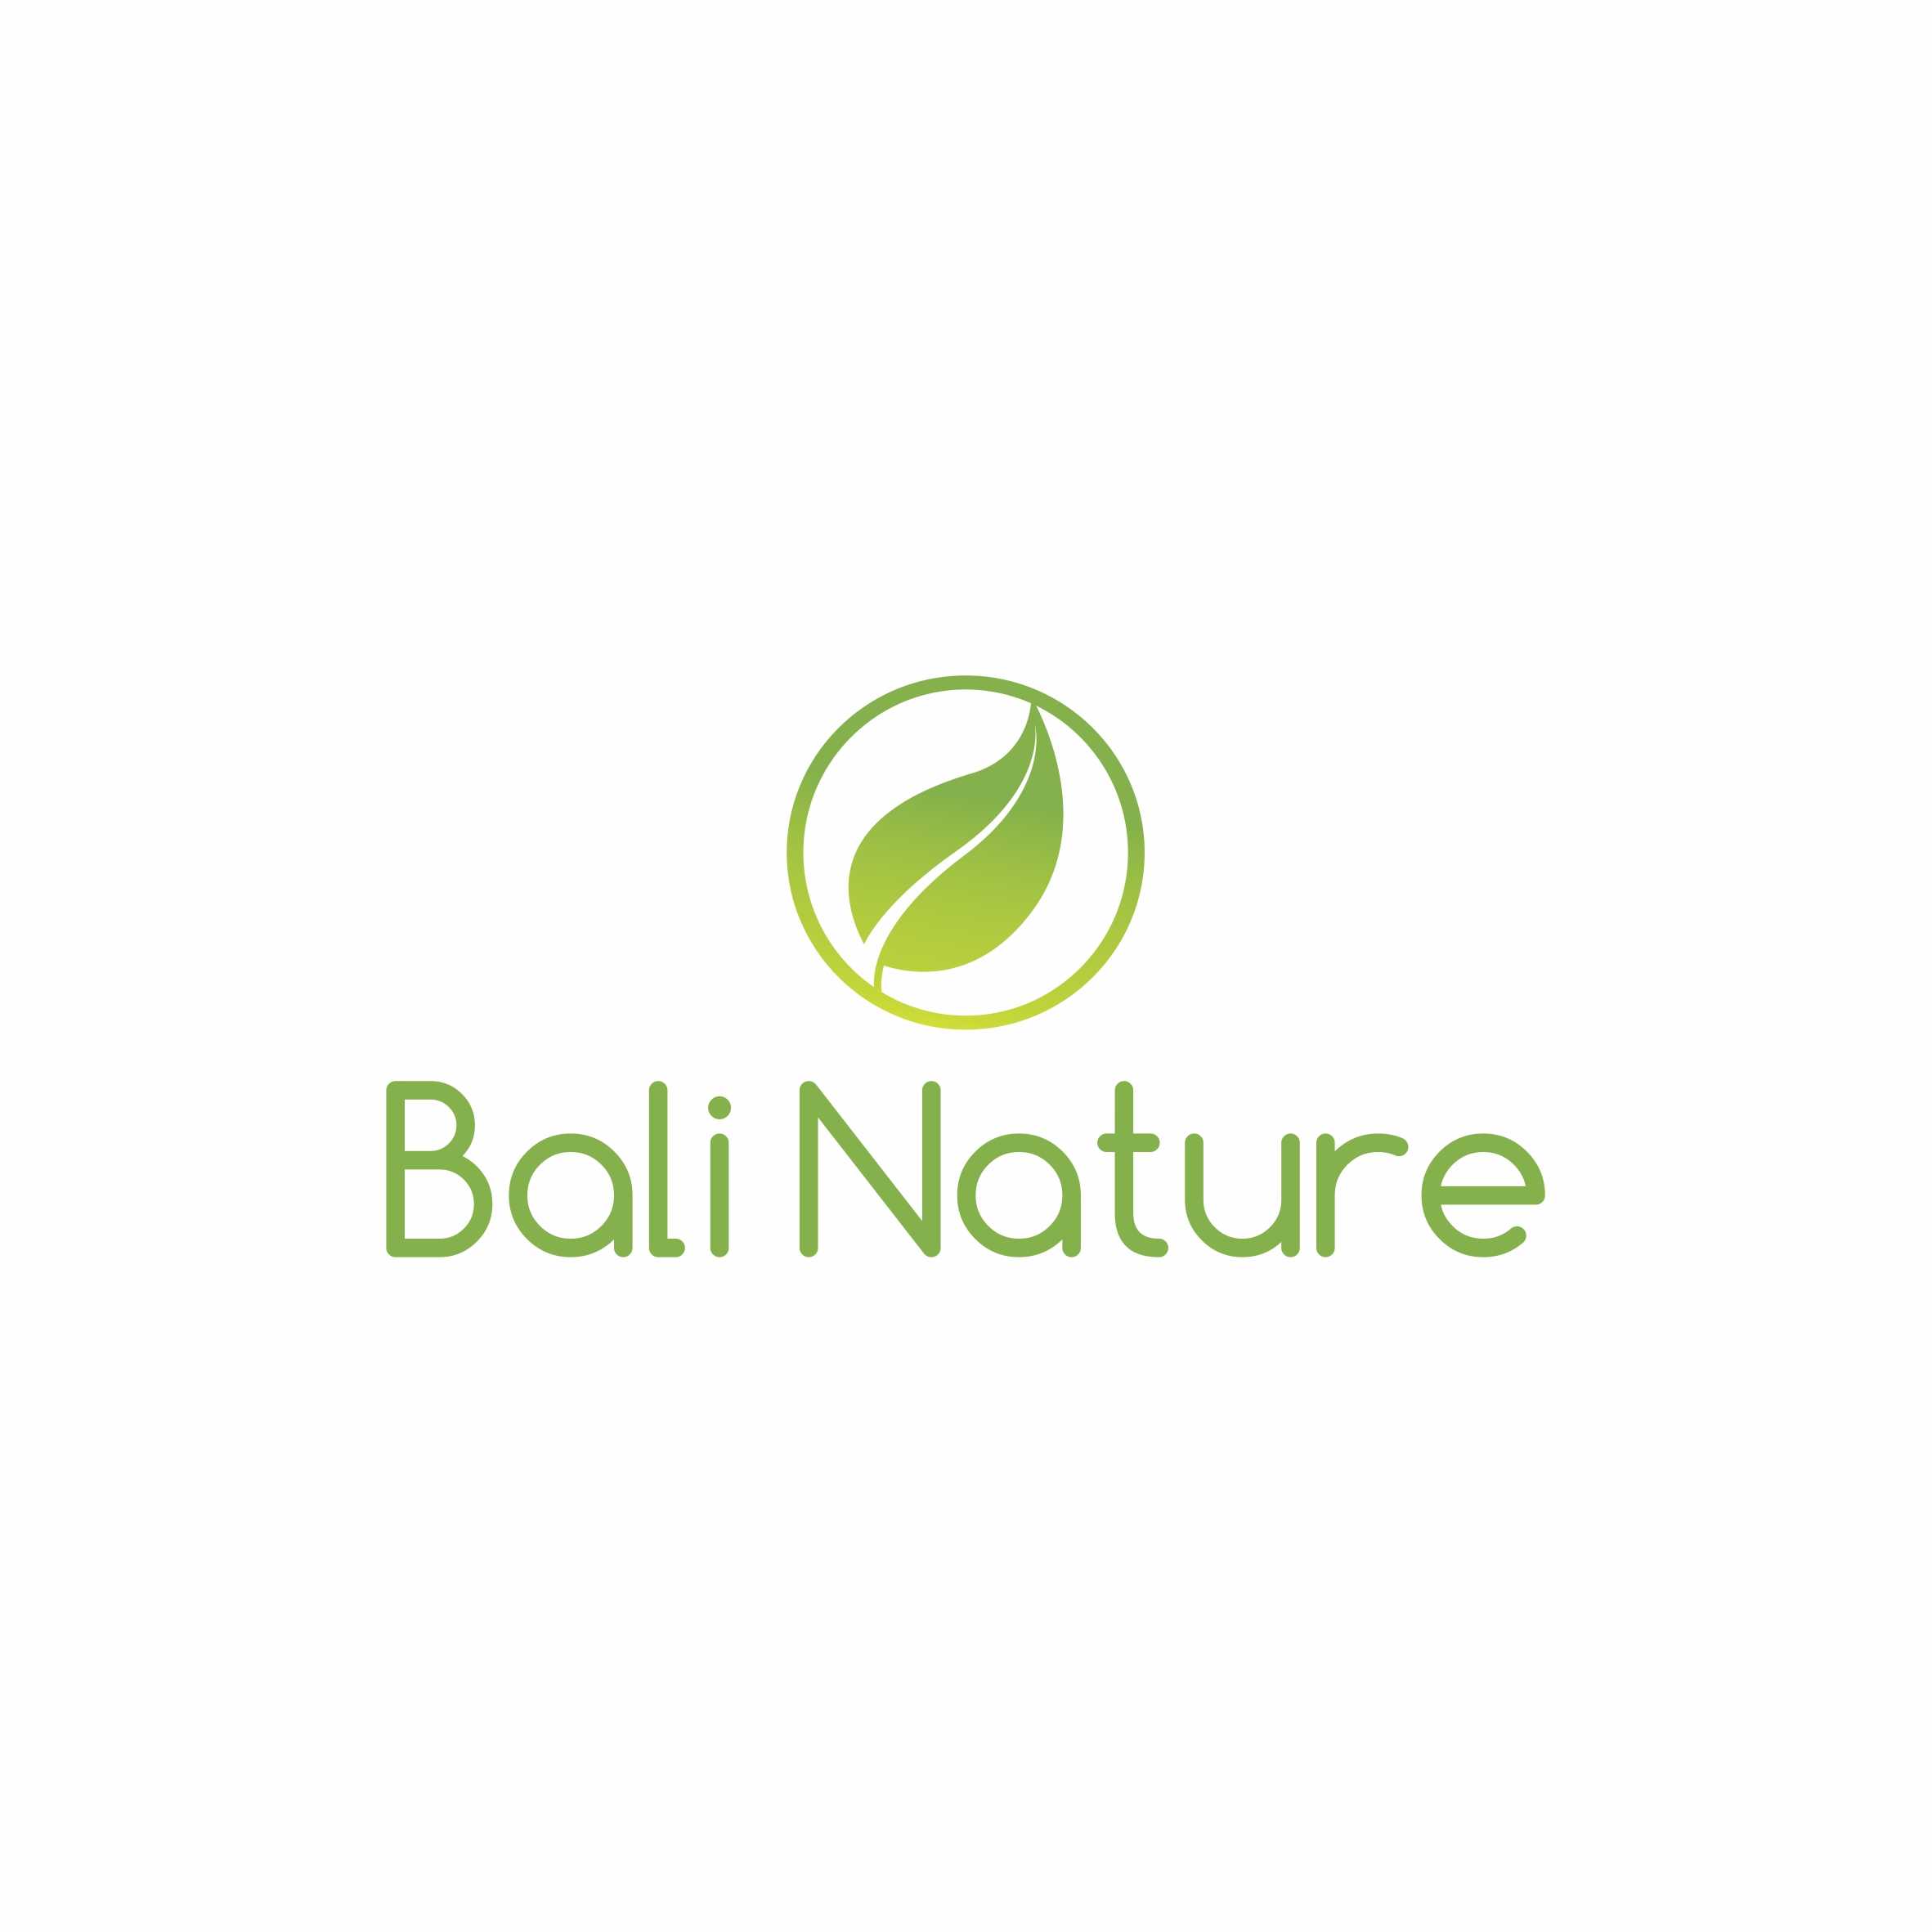 Bali Nature